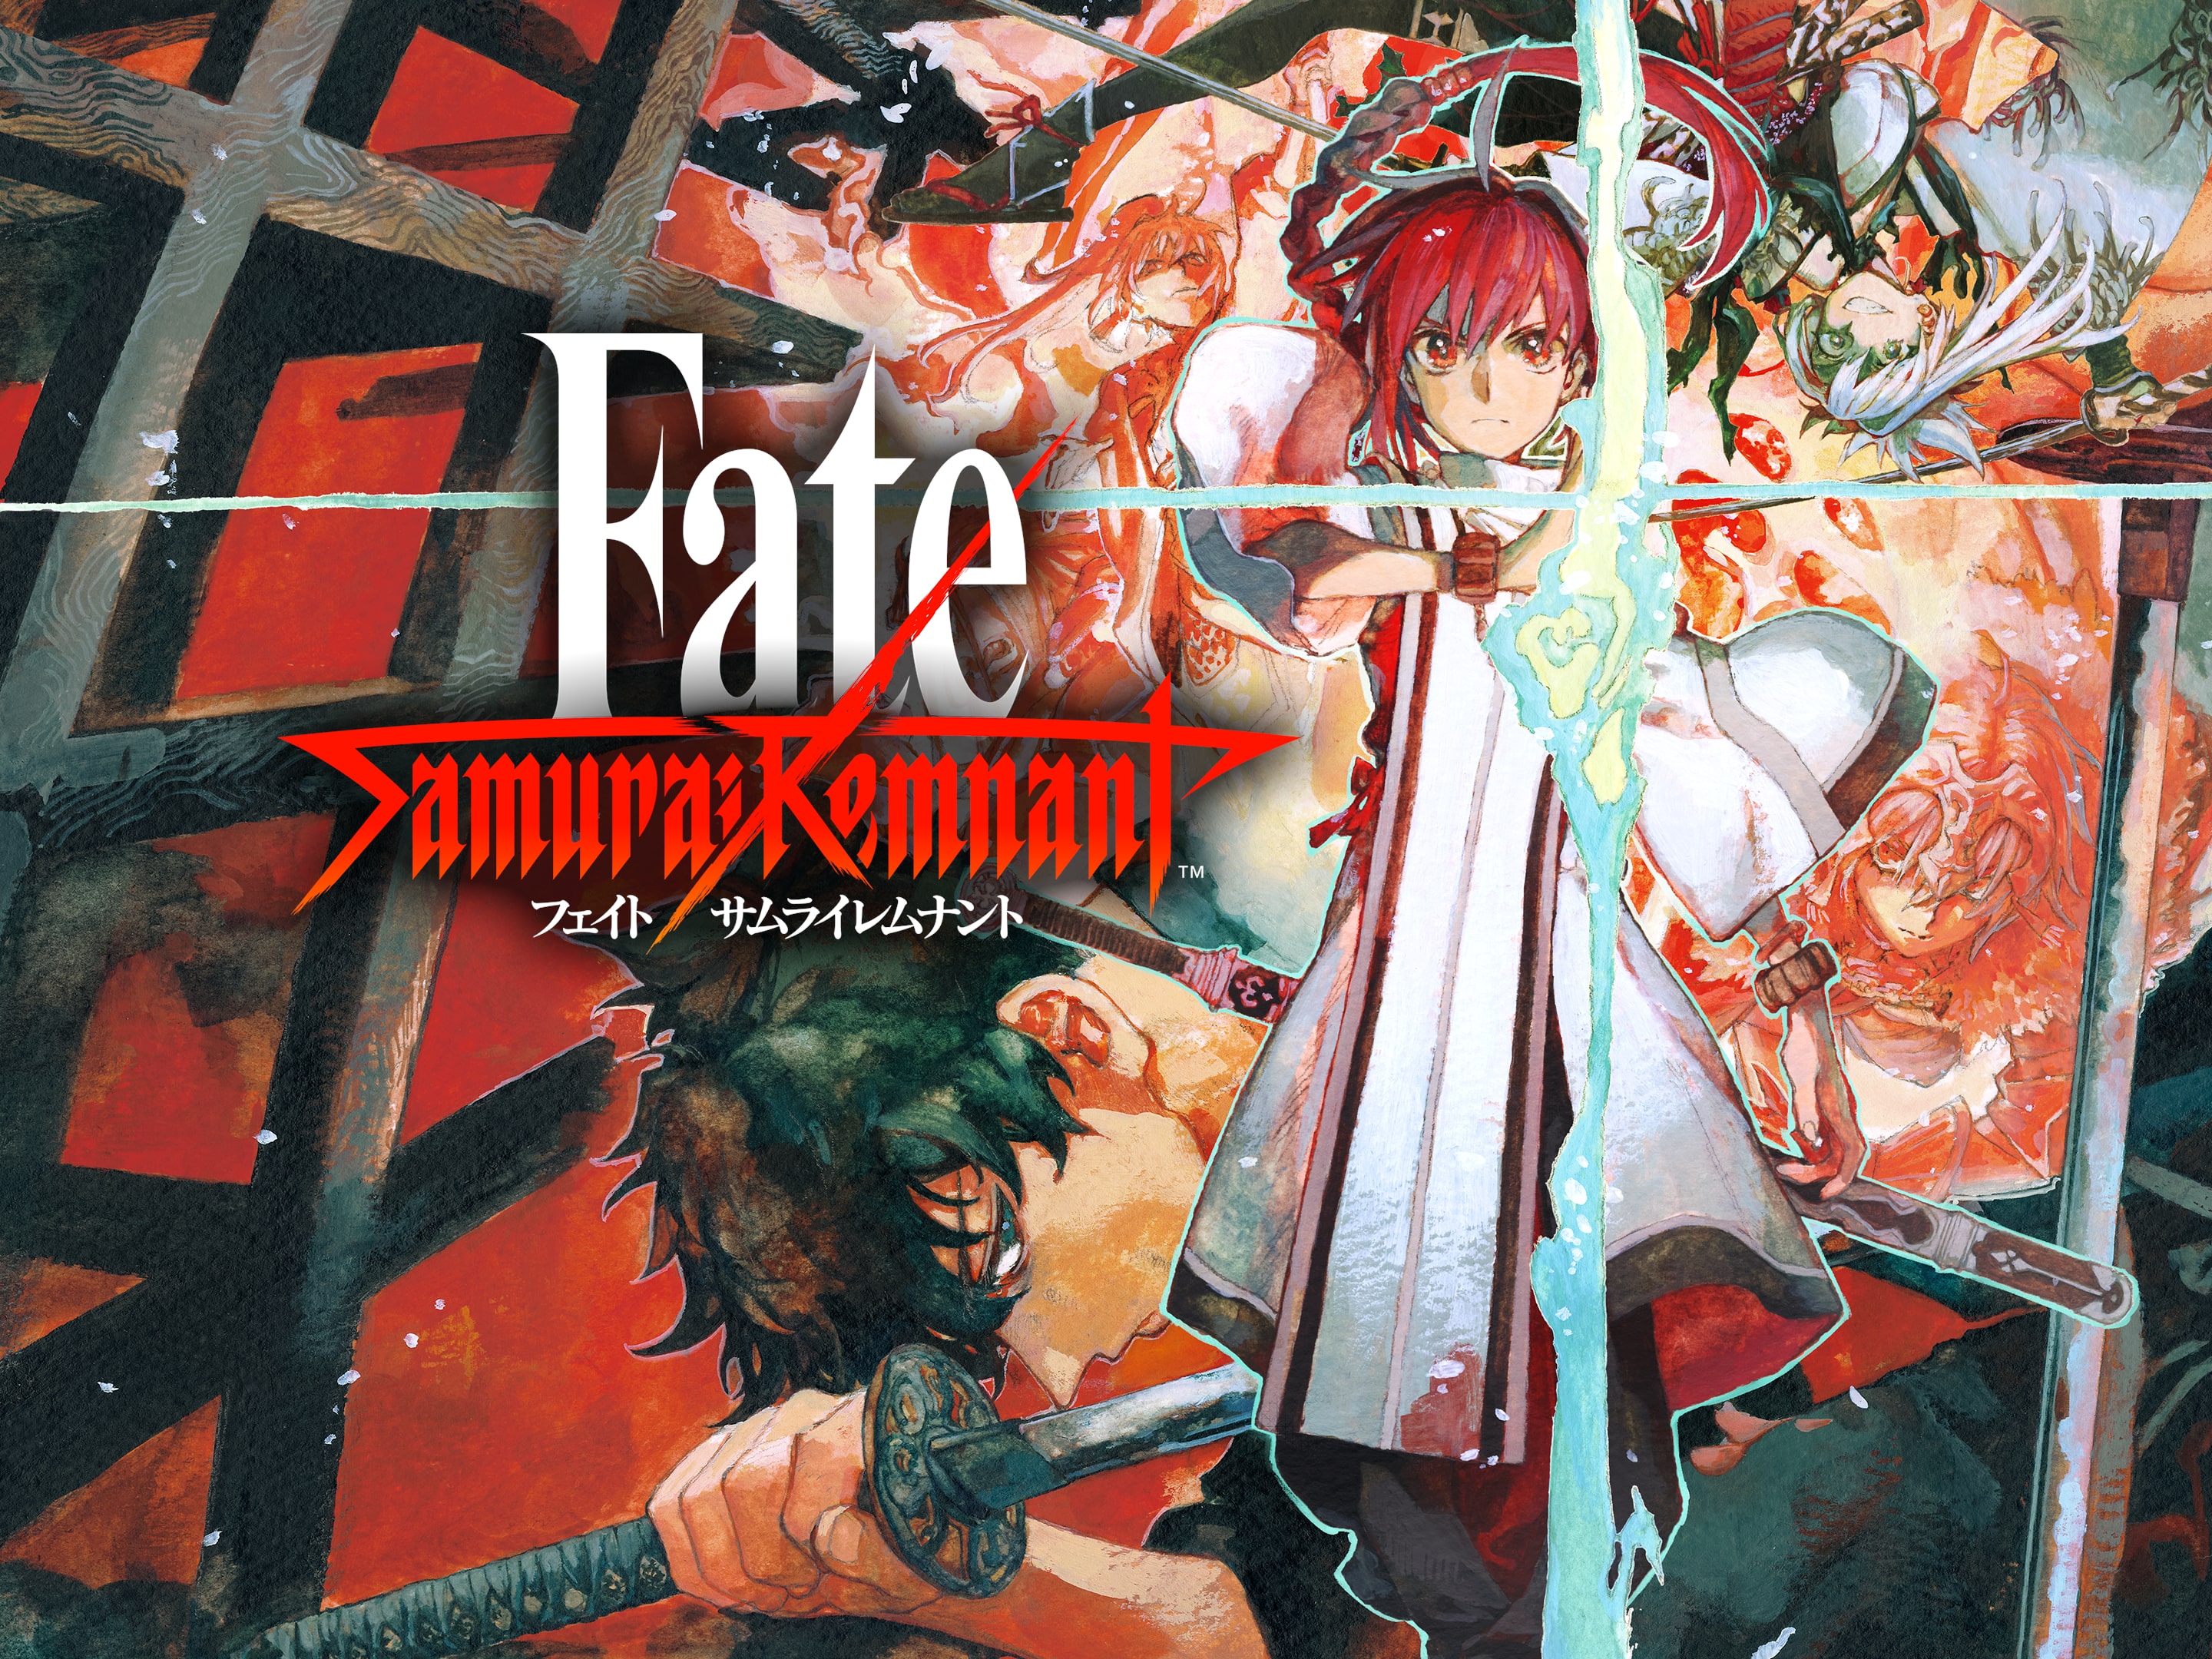 Fate/Samurai Remnant Digital Artbook & Soundtrack